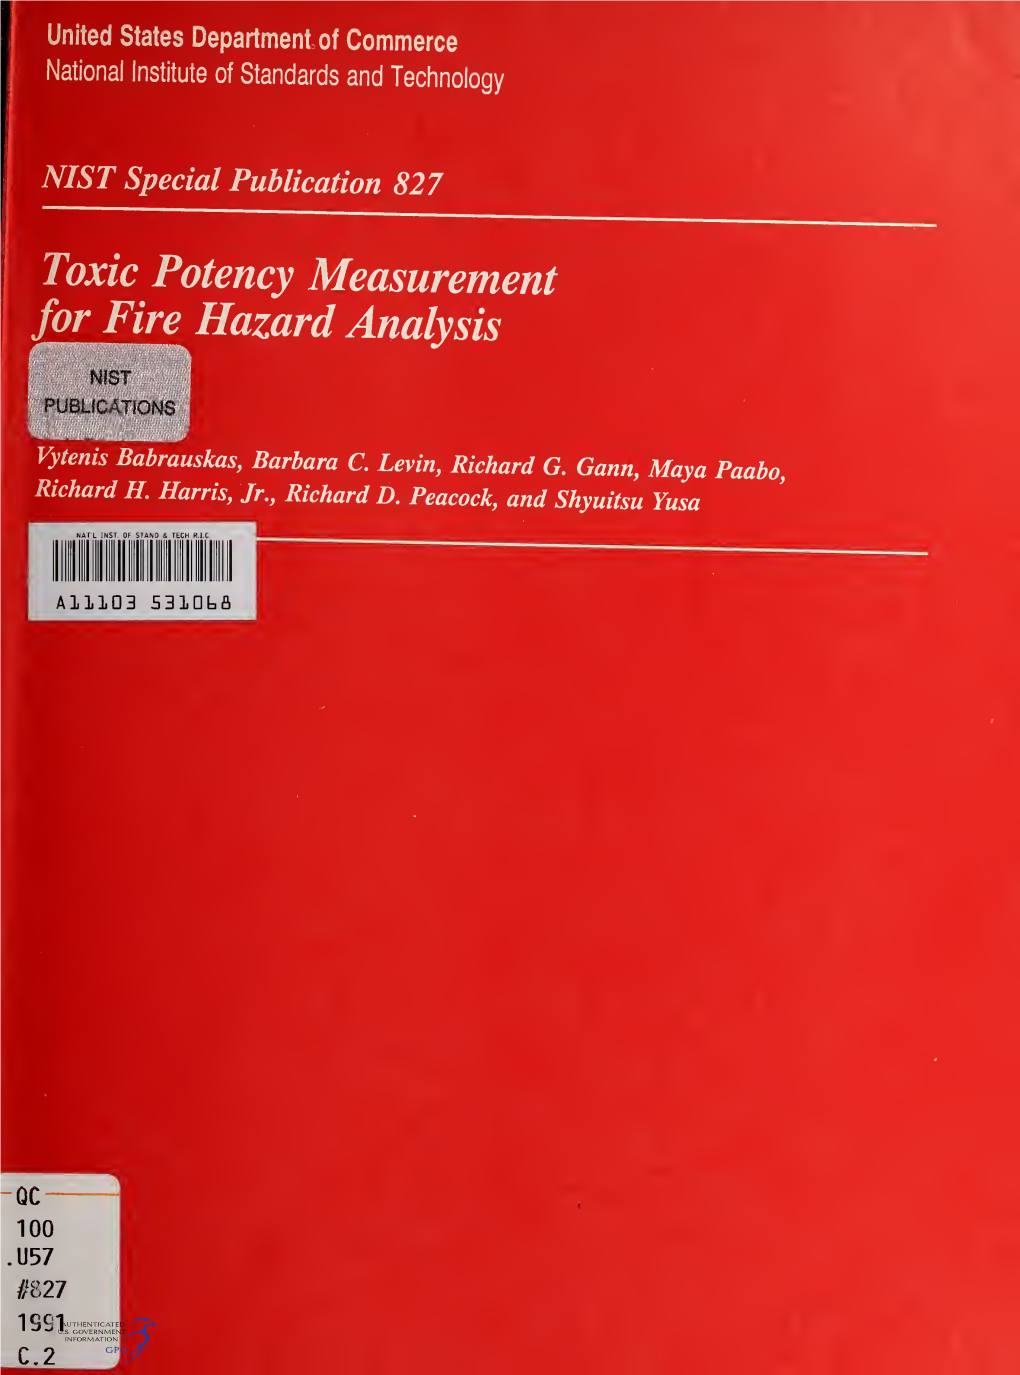 Toxic Potency Measurement for Fire Hazard Analysis